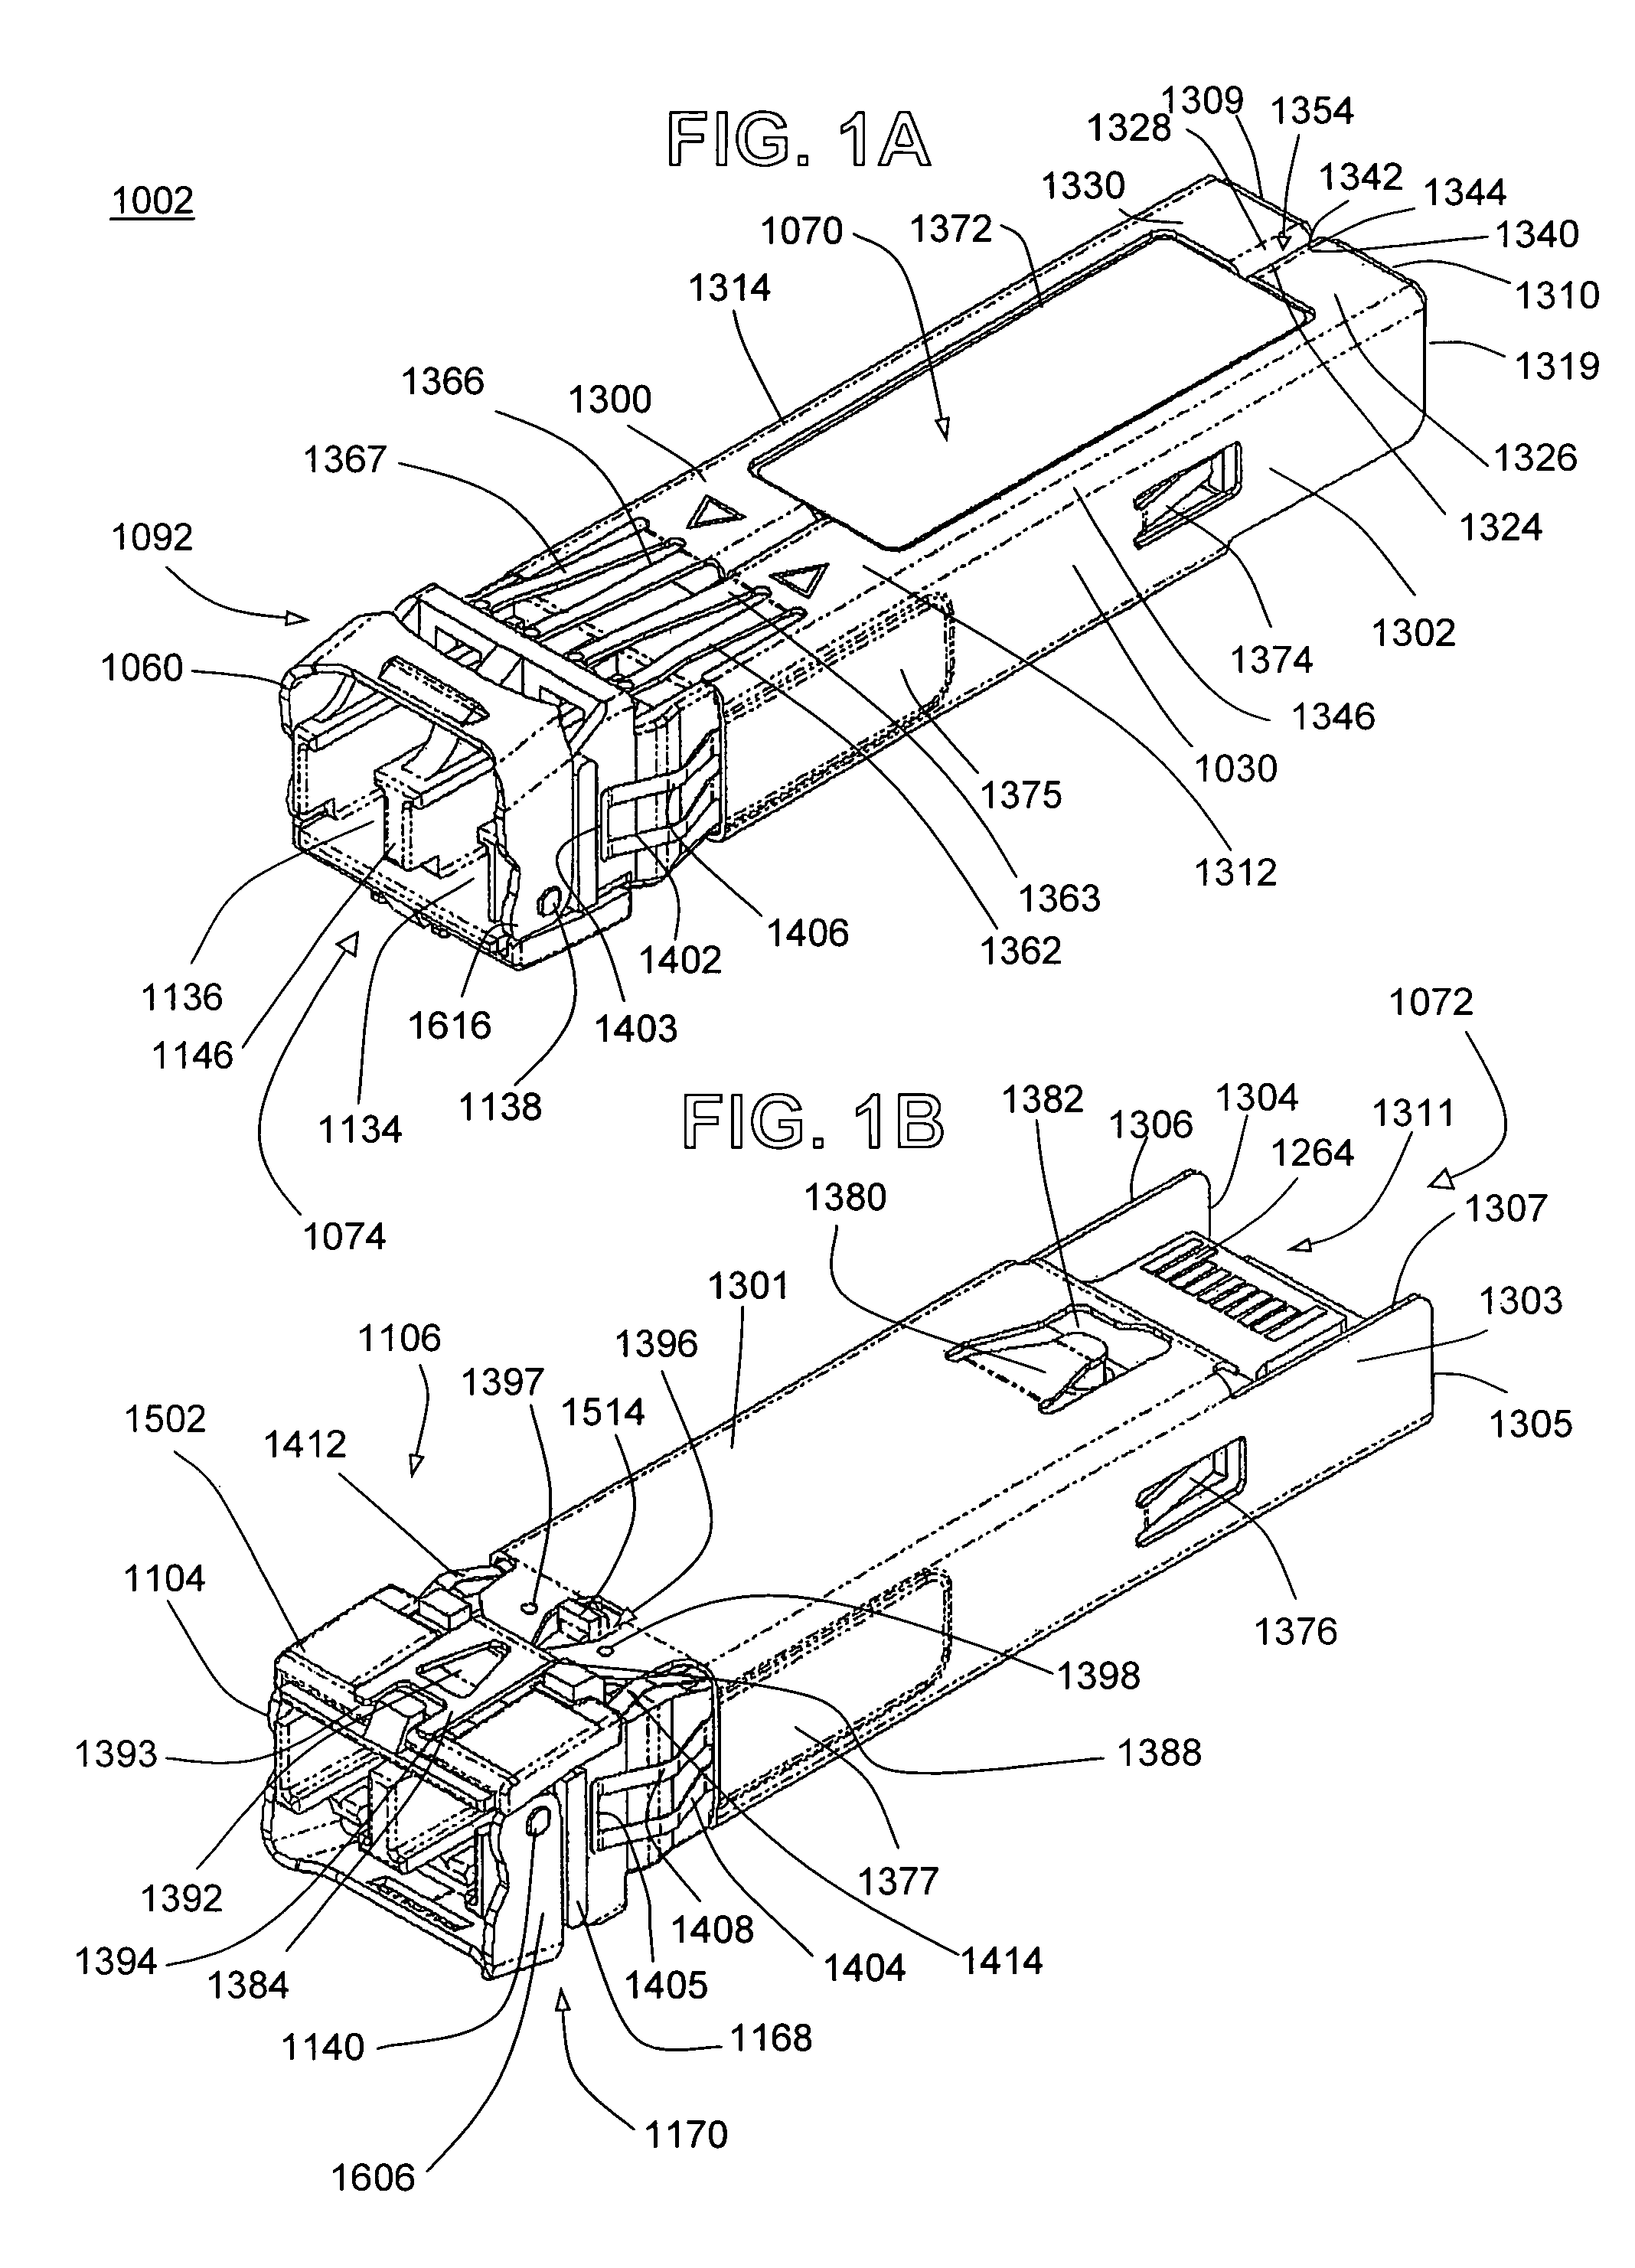 Transceiver module